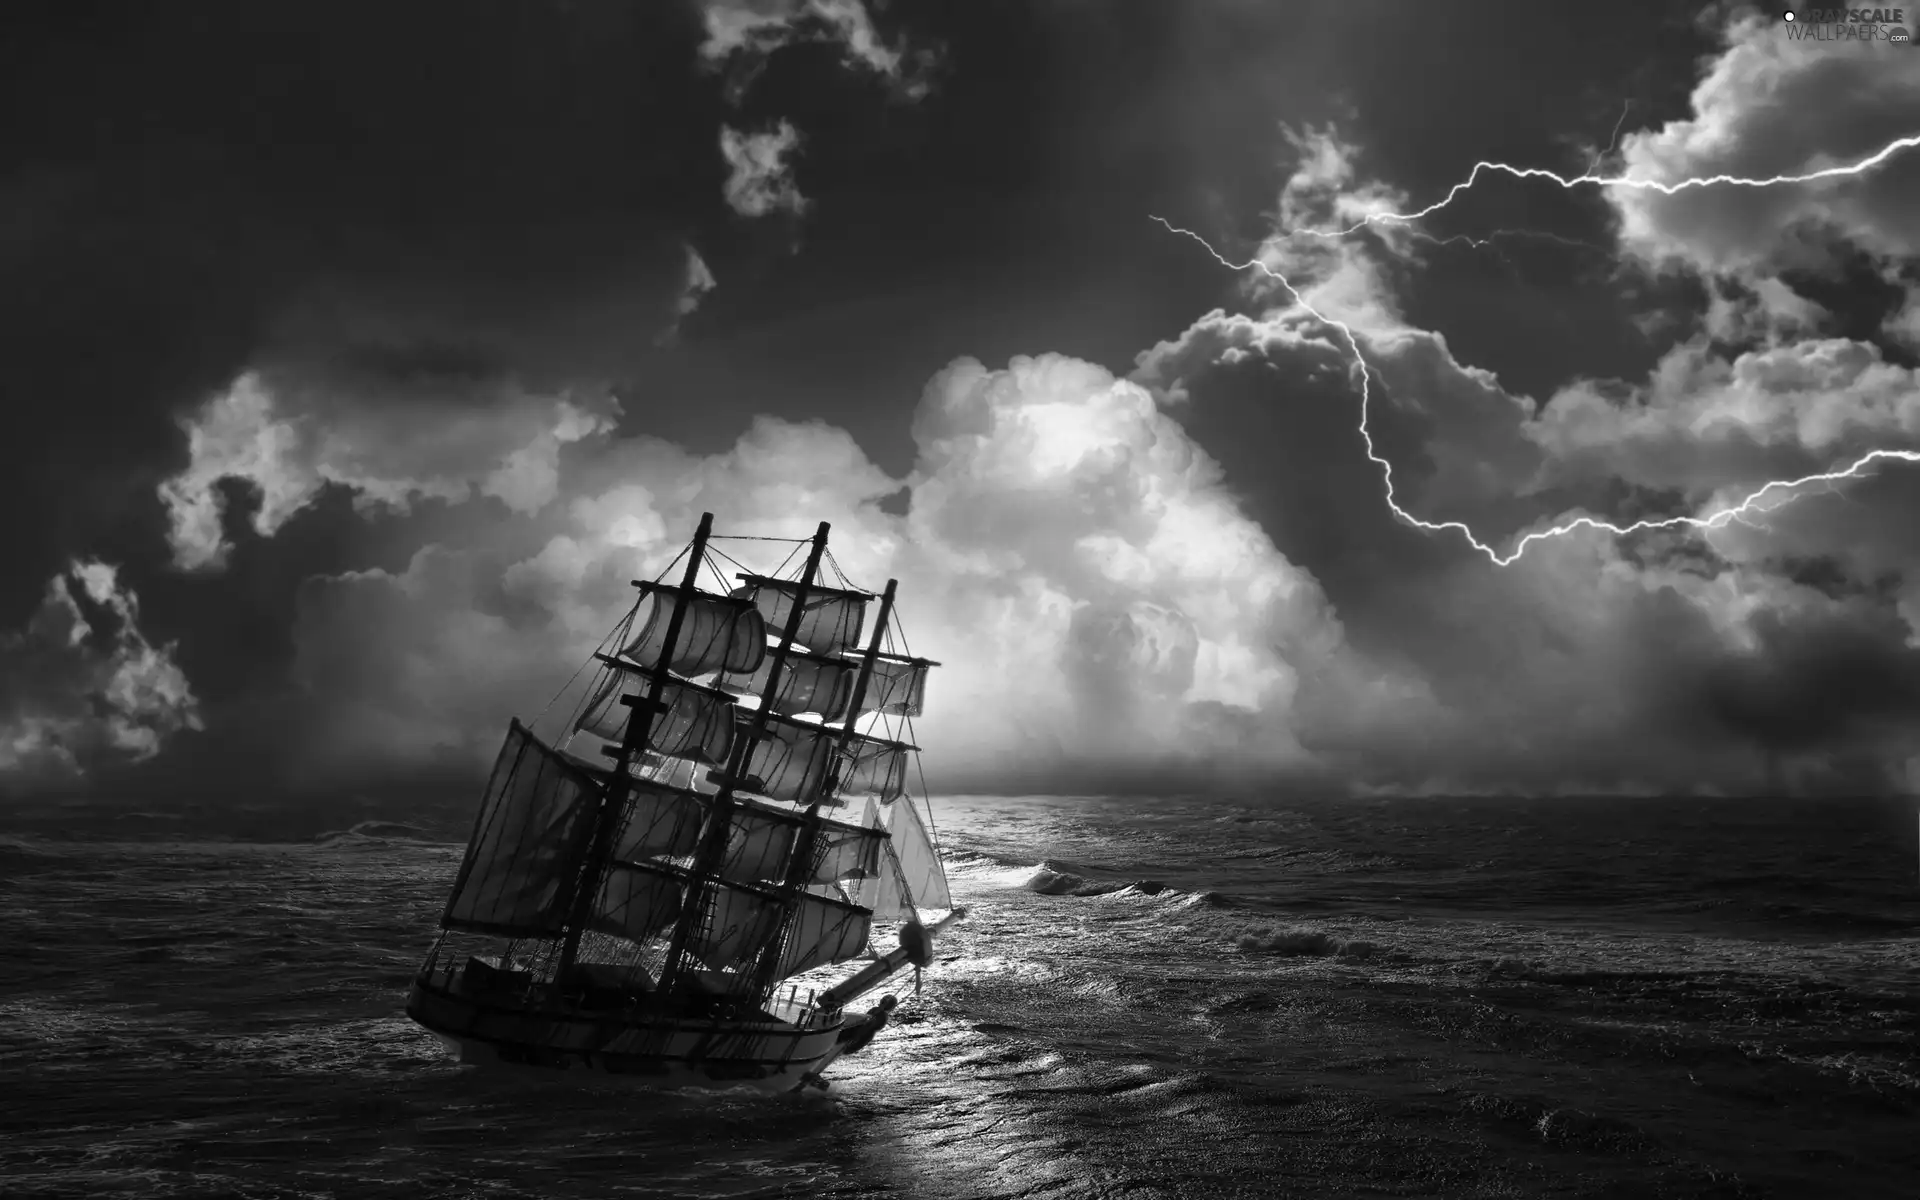 Storm, sea, sailing vessel, clouds